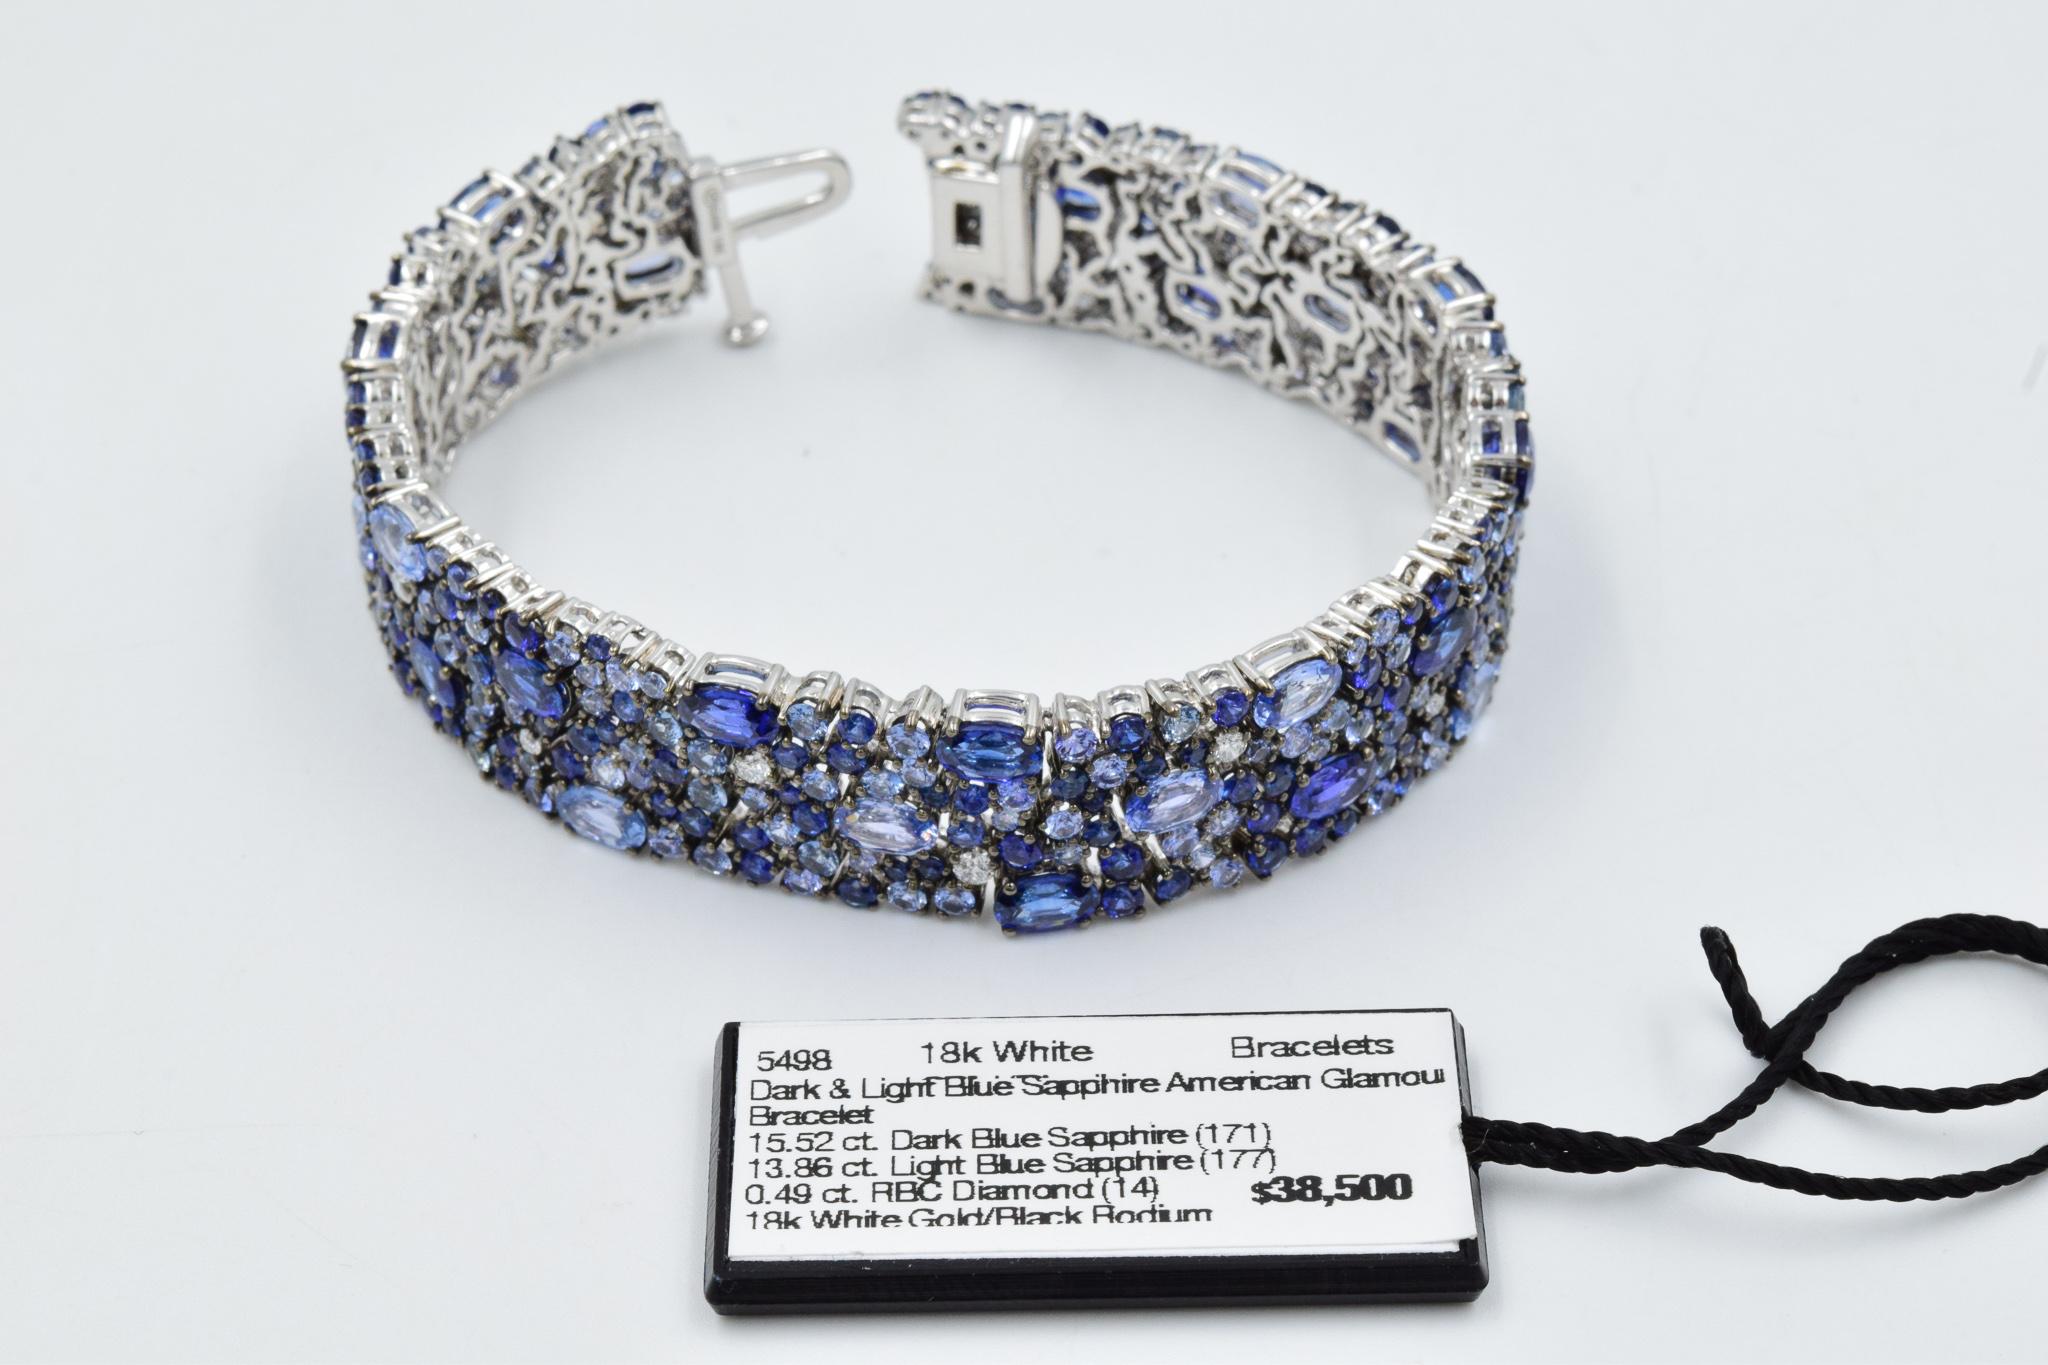 Robert Procop American Glamour Bracelet - Dark and Light Blue Sapphire in 18k 3